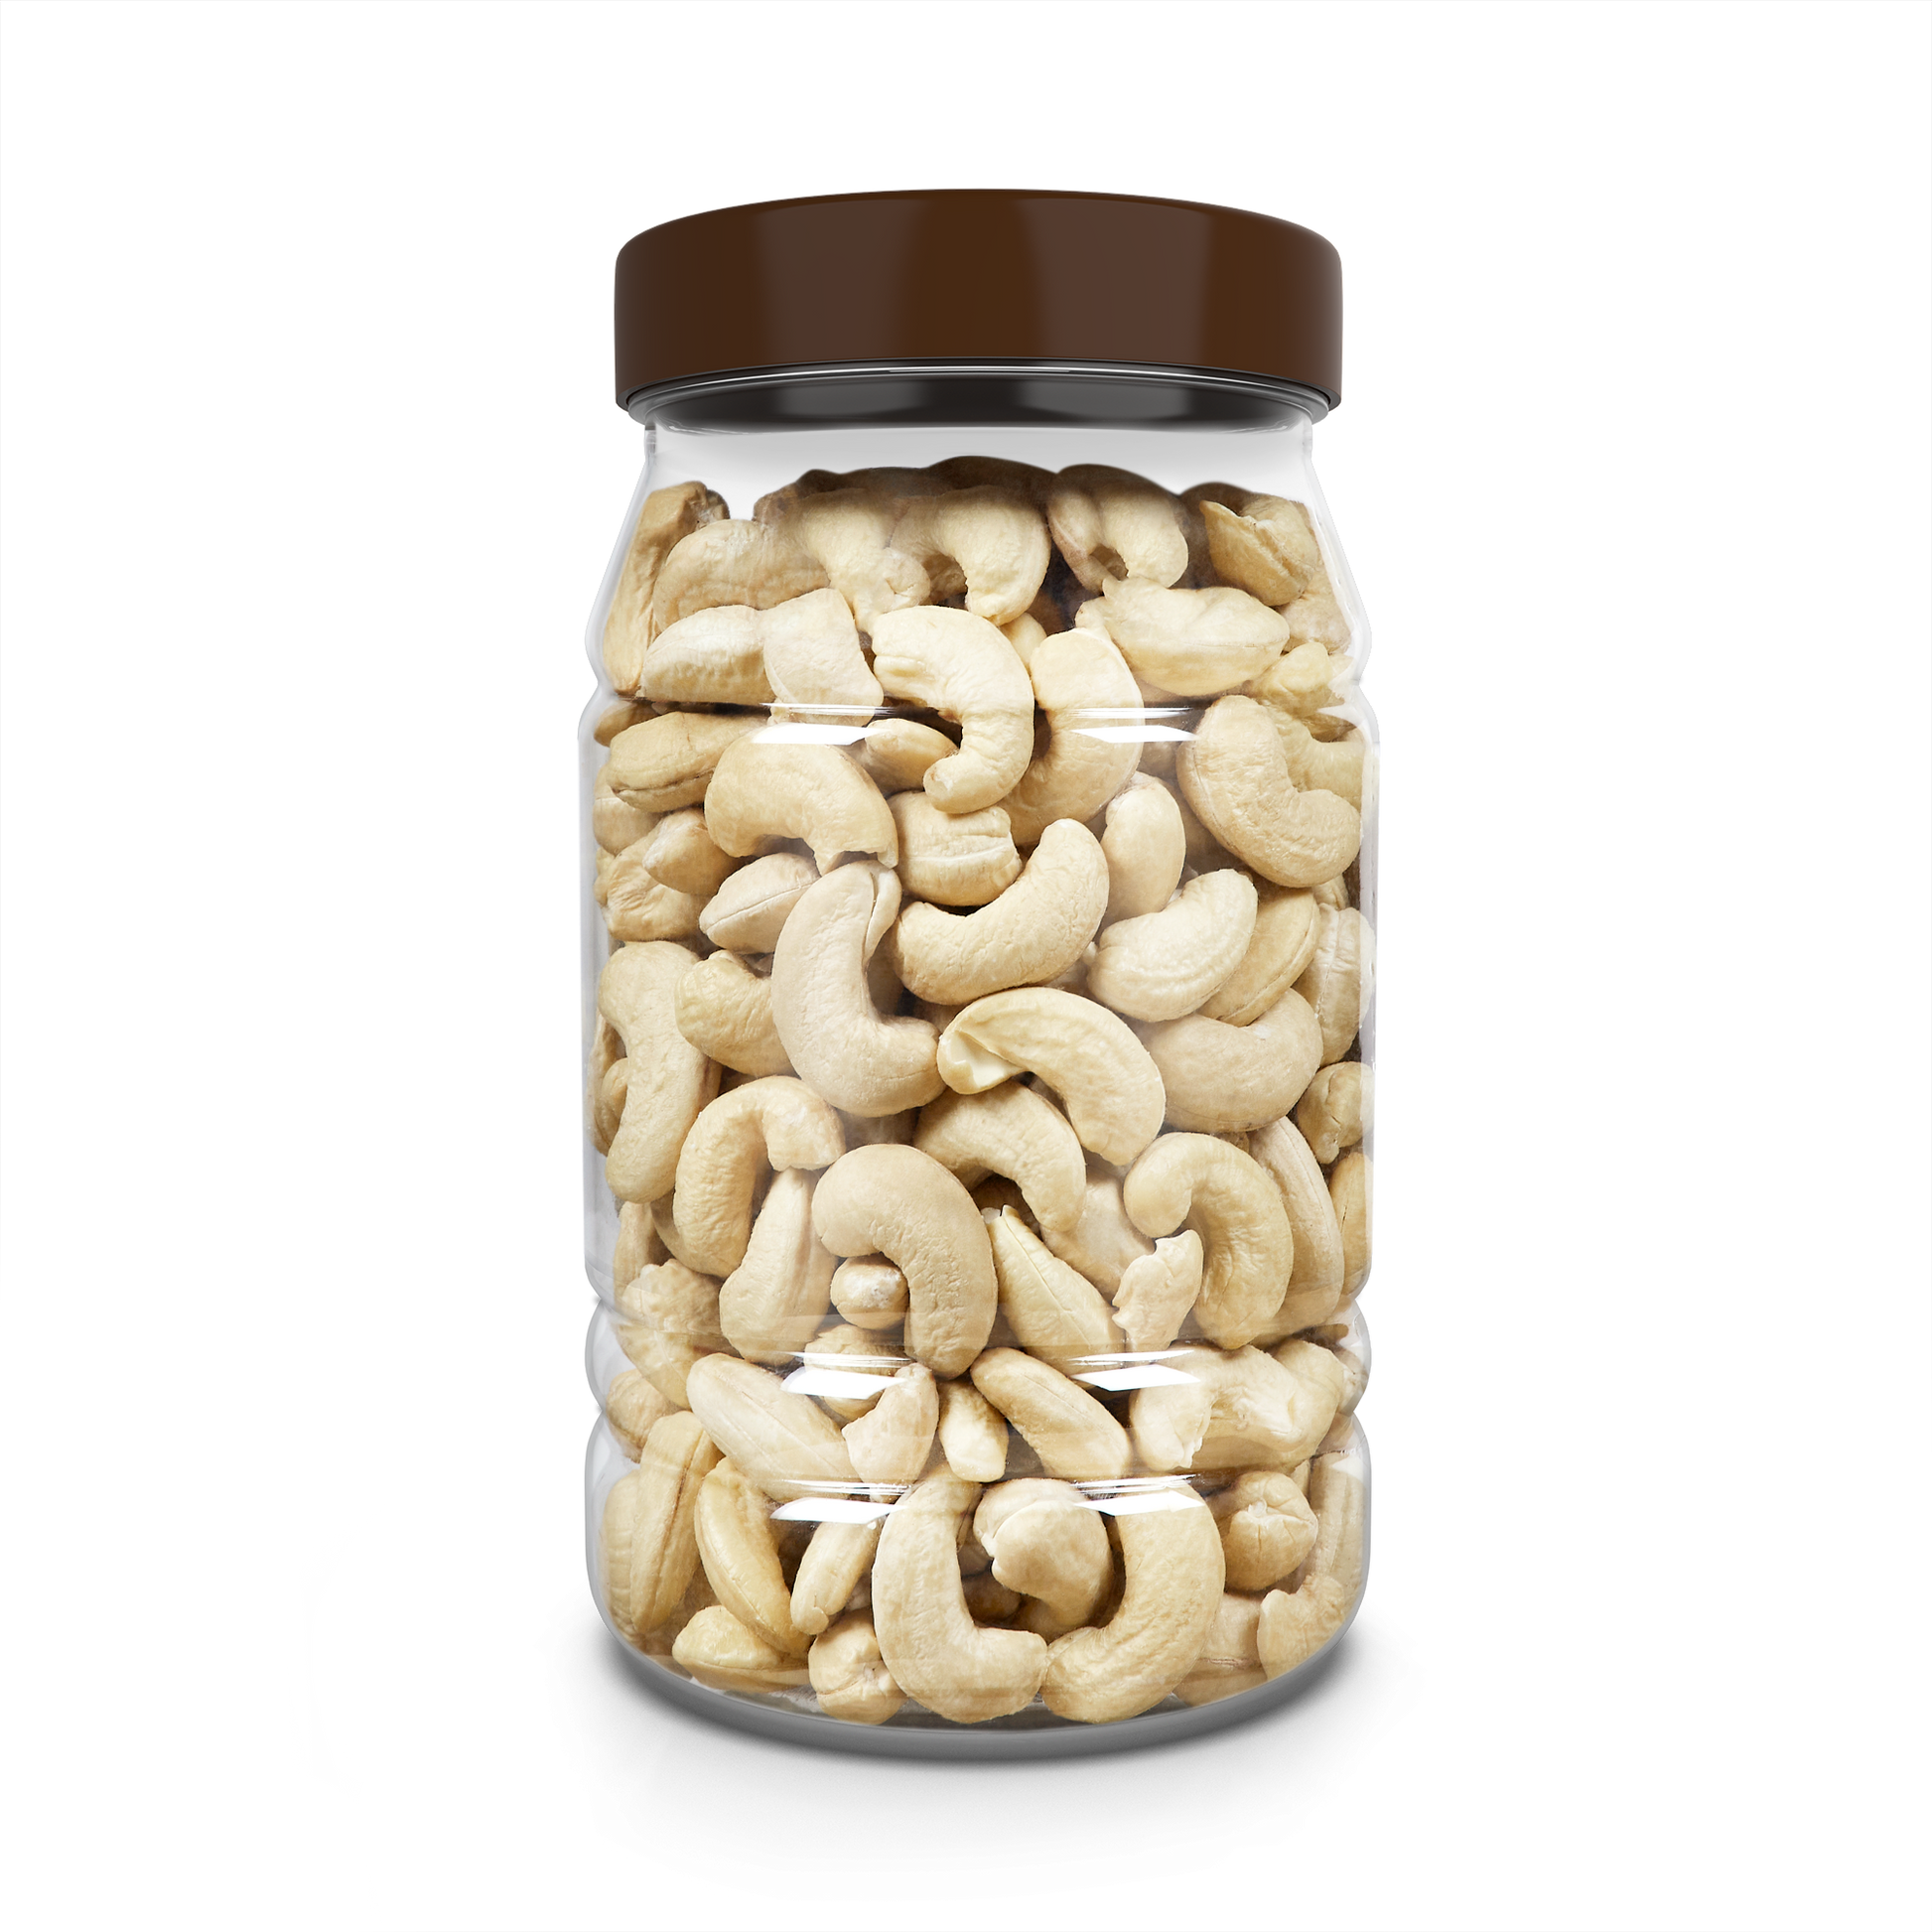 SAO Foods Big Cashews 500 gm